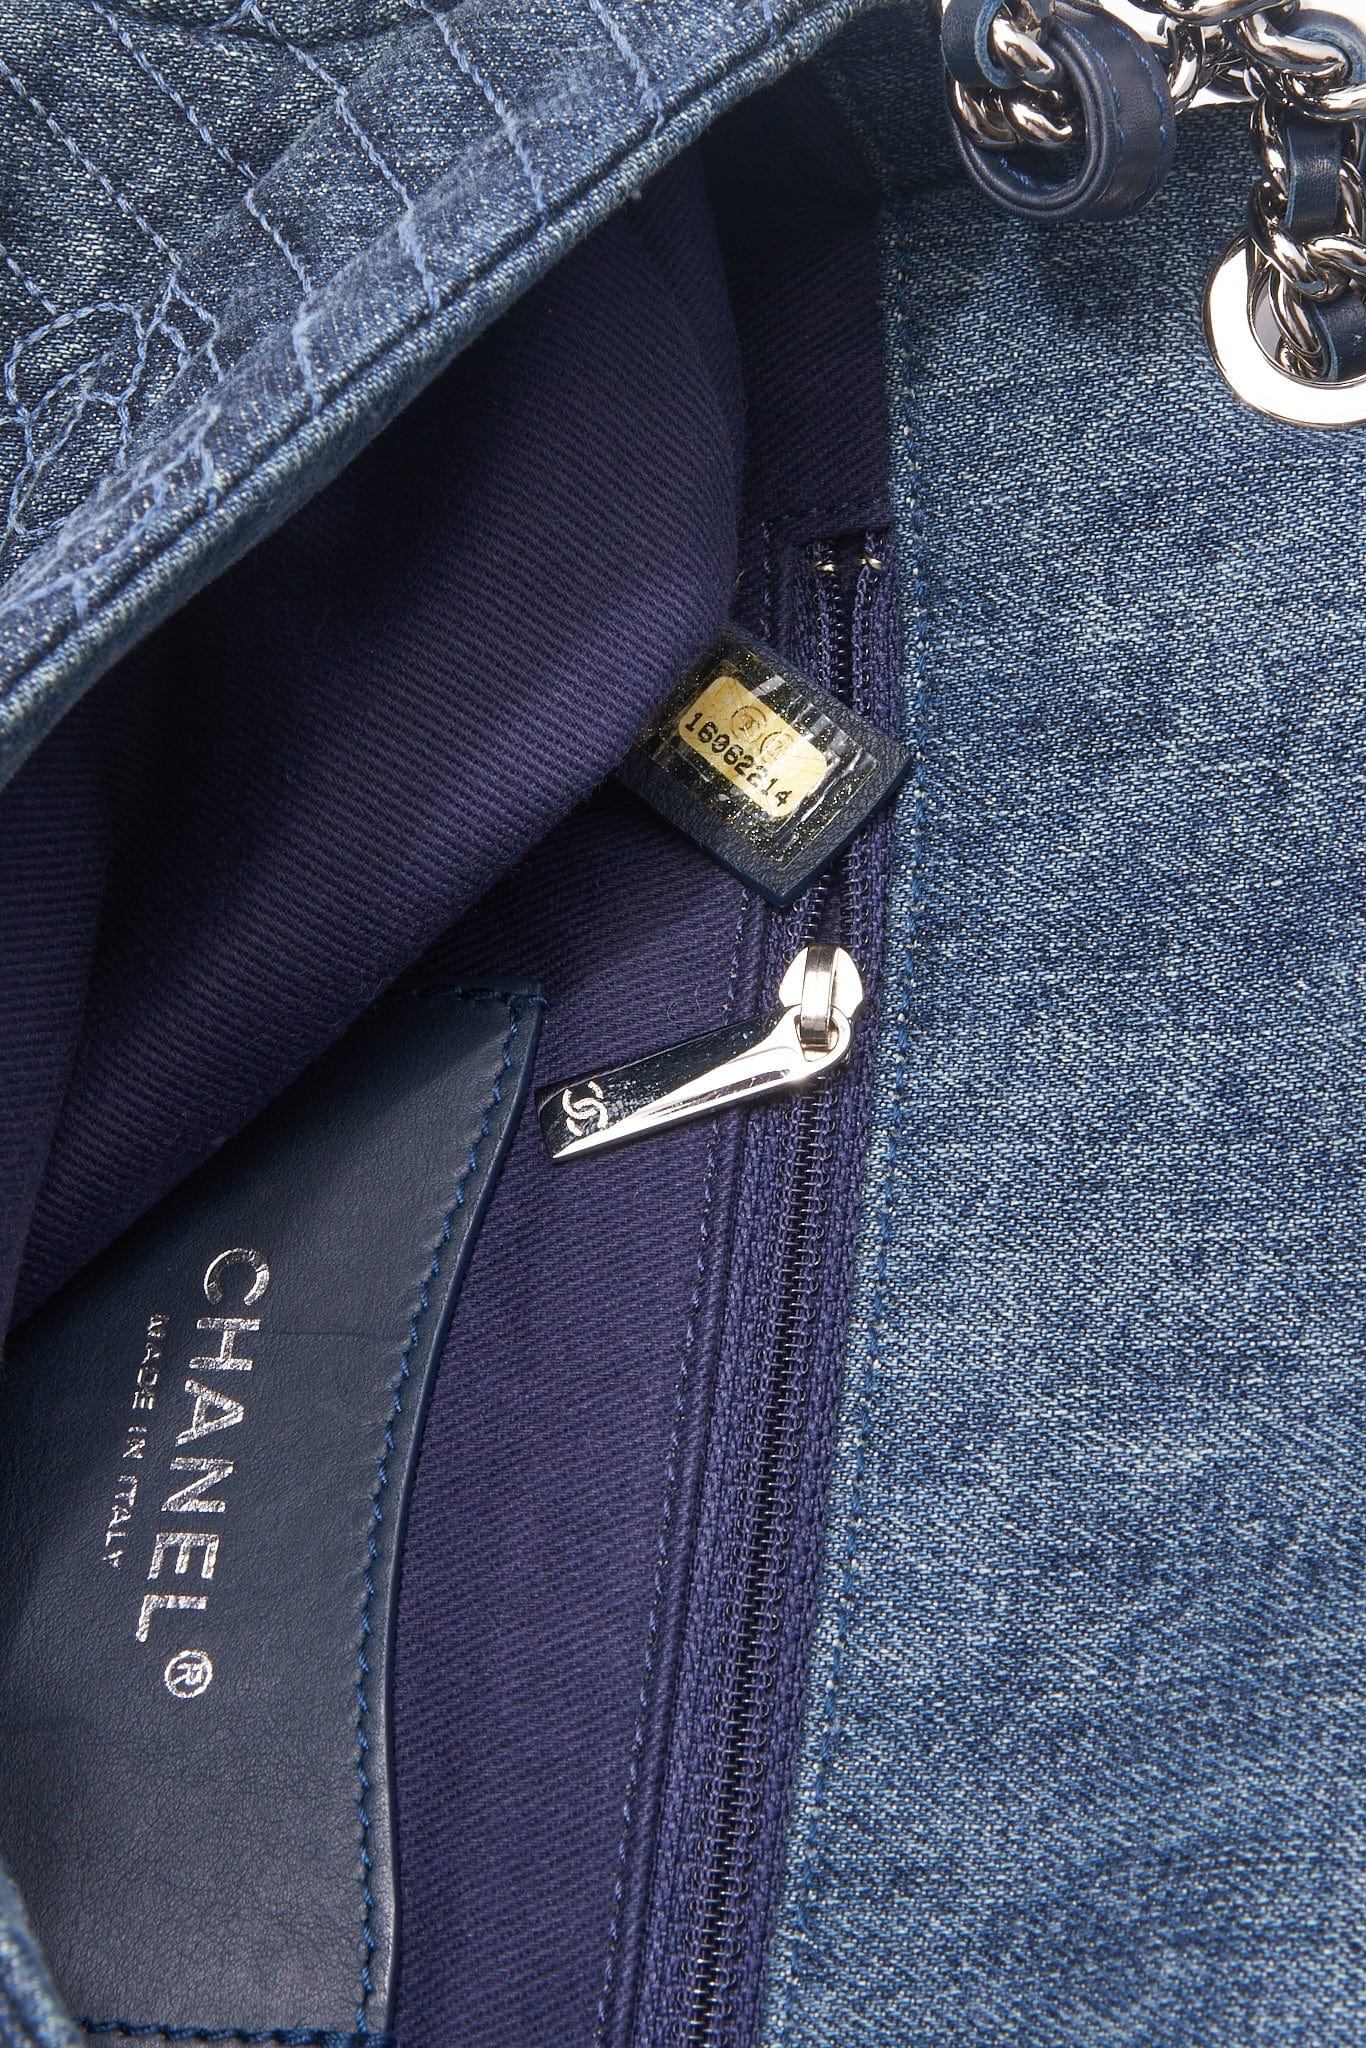 Chanel Blue Denim Camellia Embroidered CC Flap Bag